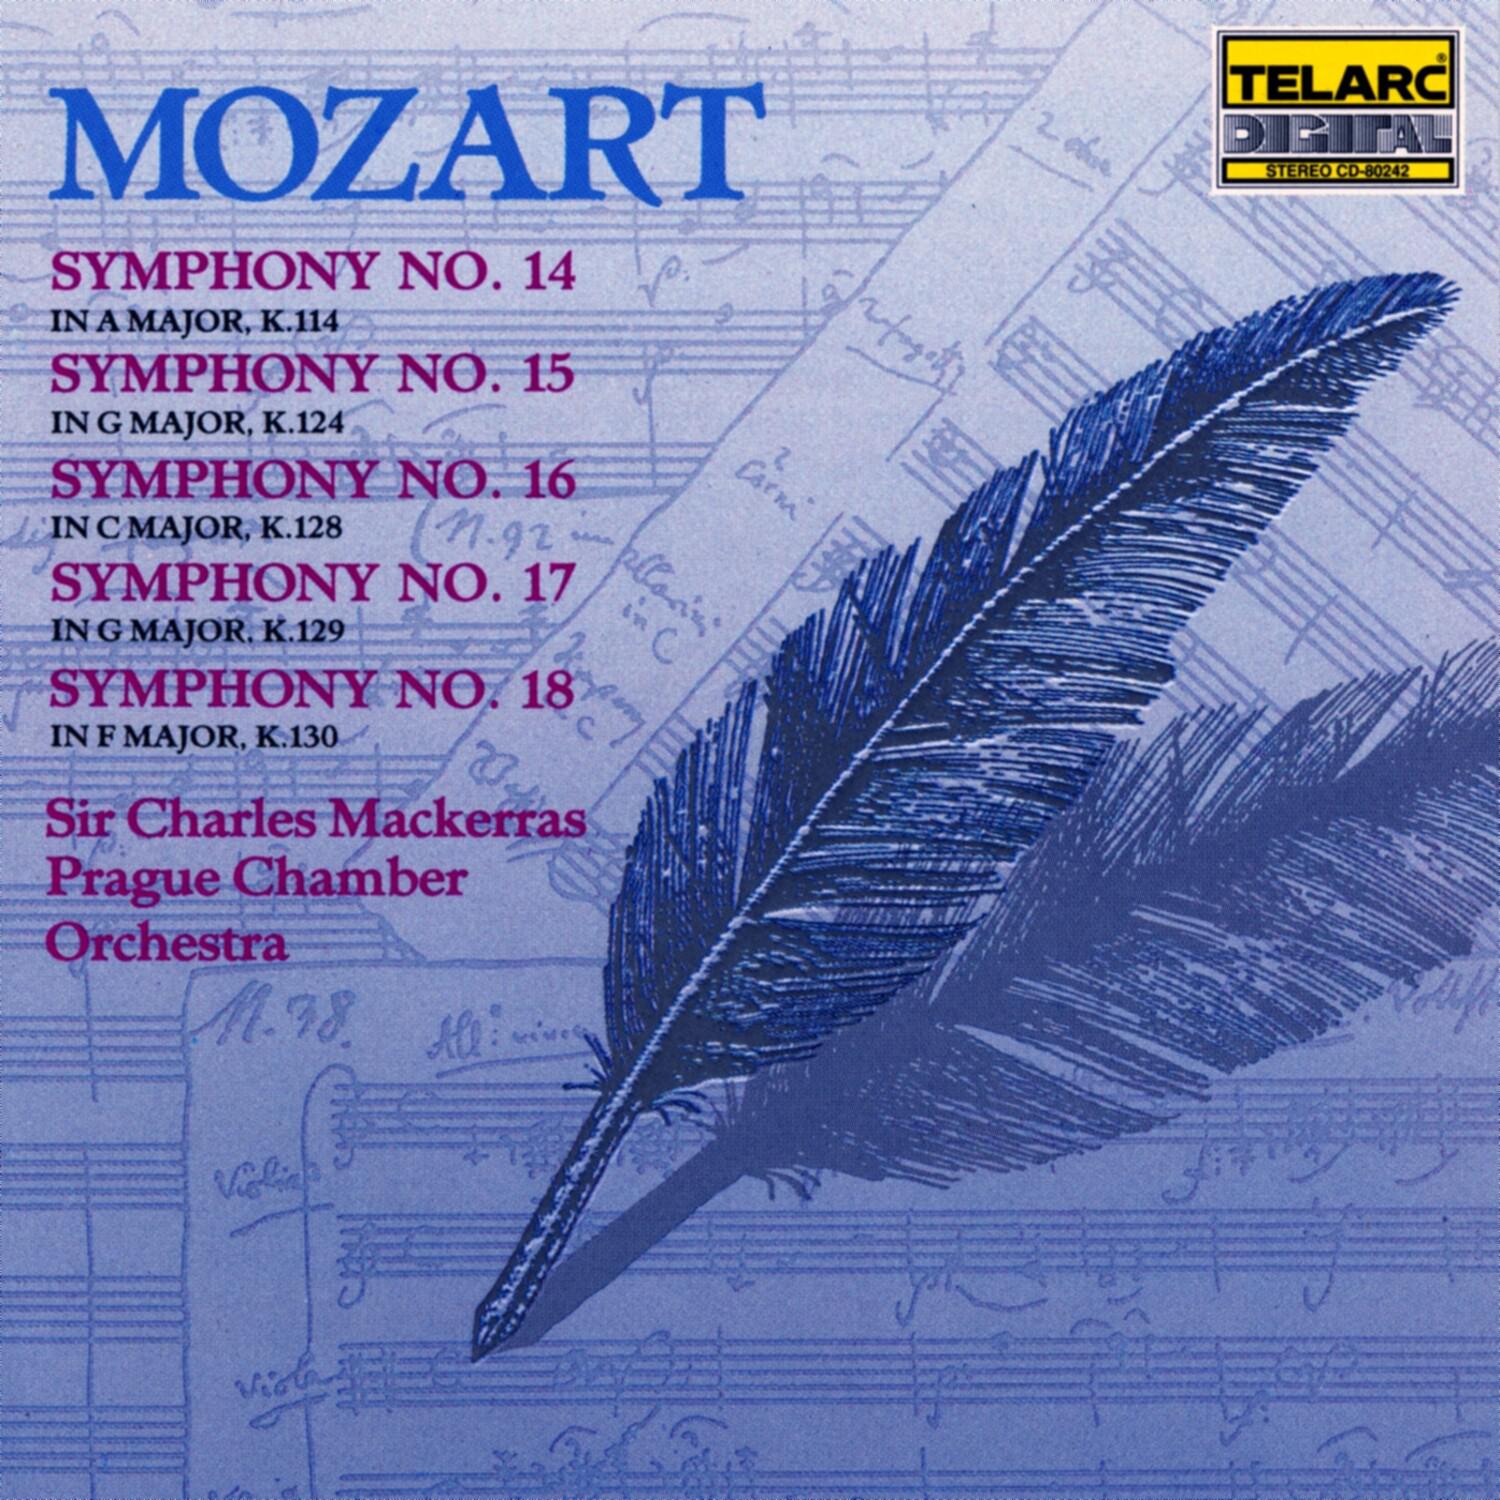 Symphony No. 17 in G major, K.129: I. Allegro